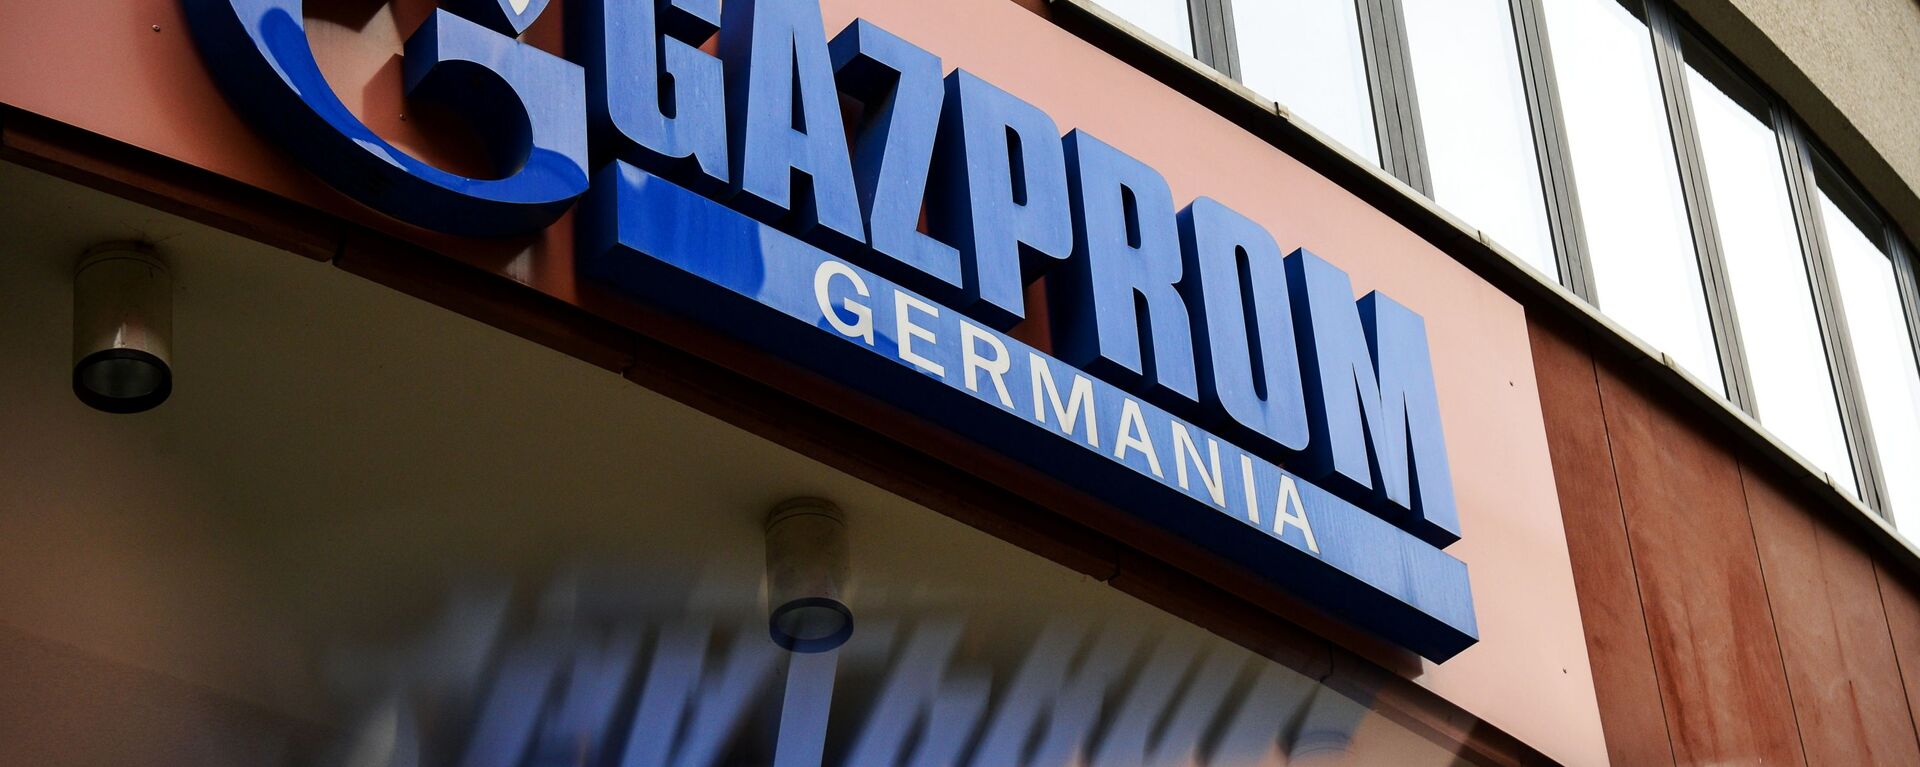 Gazprom Germania公司 - 俄罗斯卫星通讯社, 1920, 28.08.2022